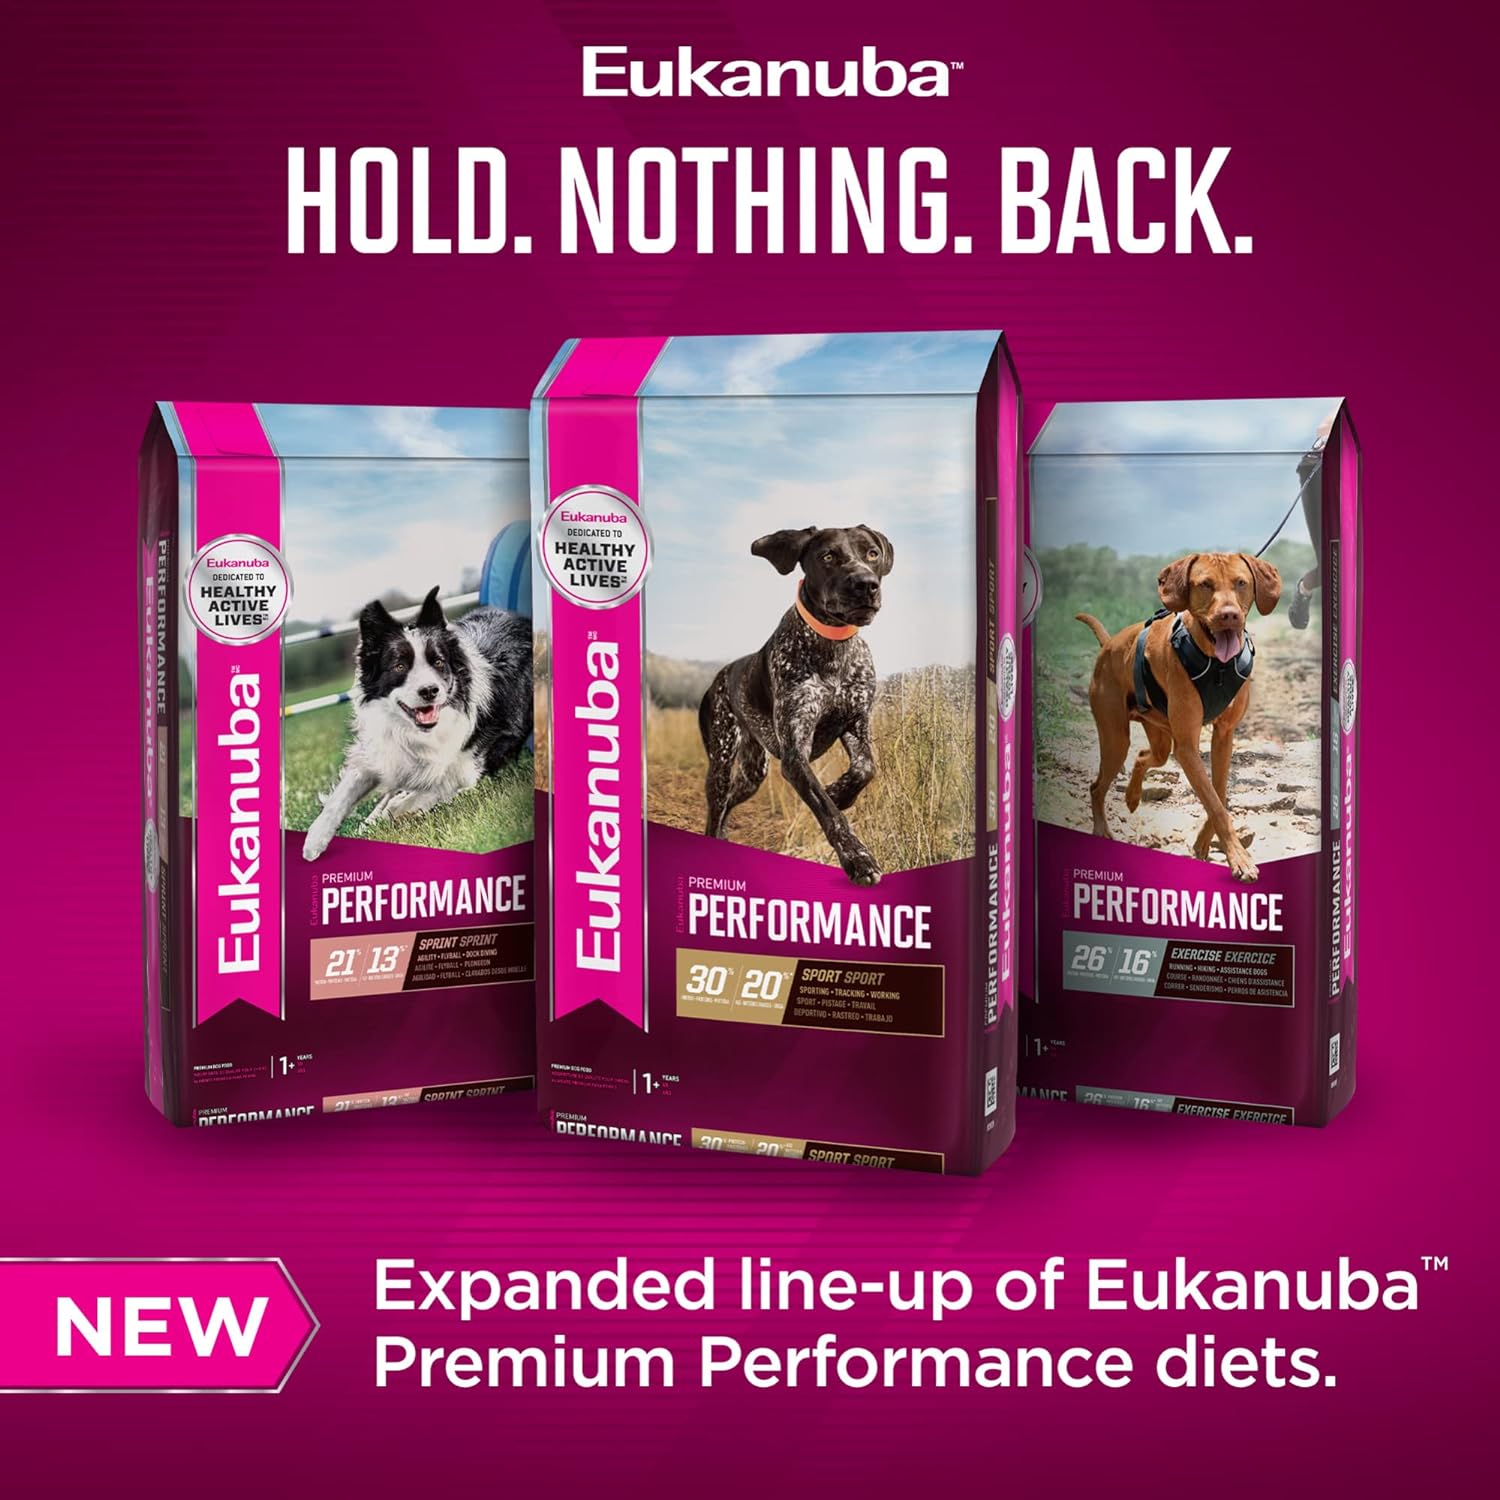 Eukanuba Premium Performance 26/16 Exercise Dry Dog Food – Gallery Image 9